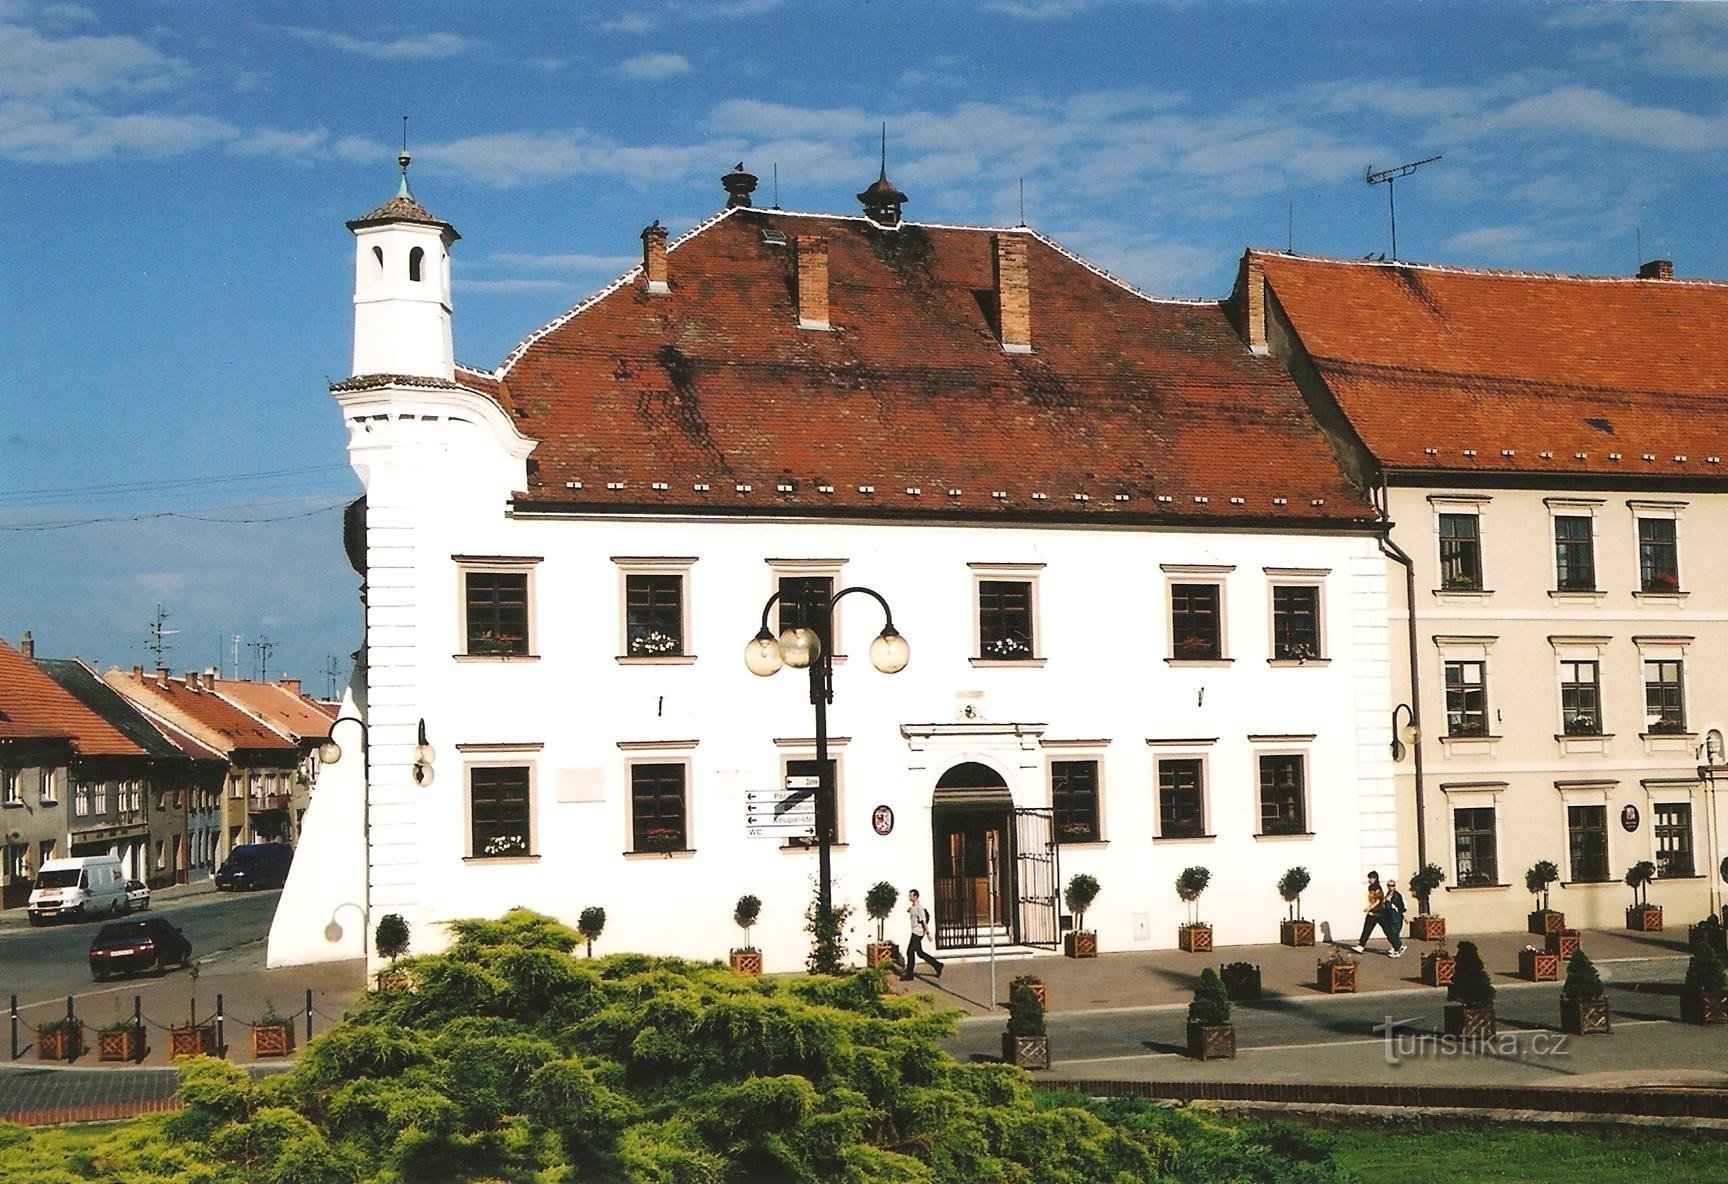 Slavkov - prefeitura